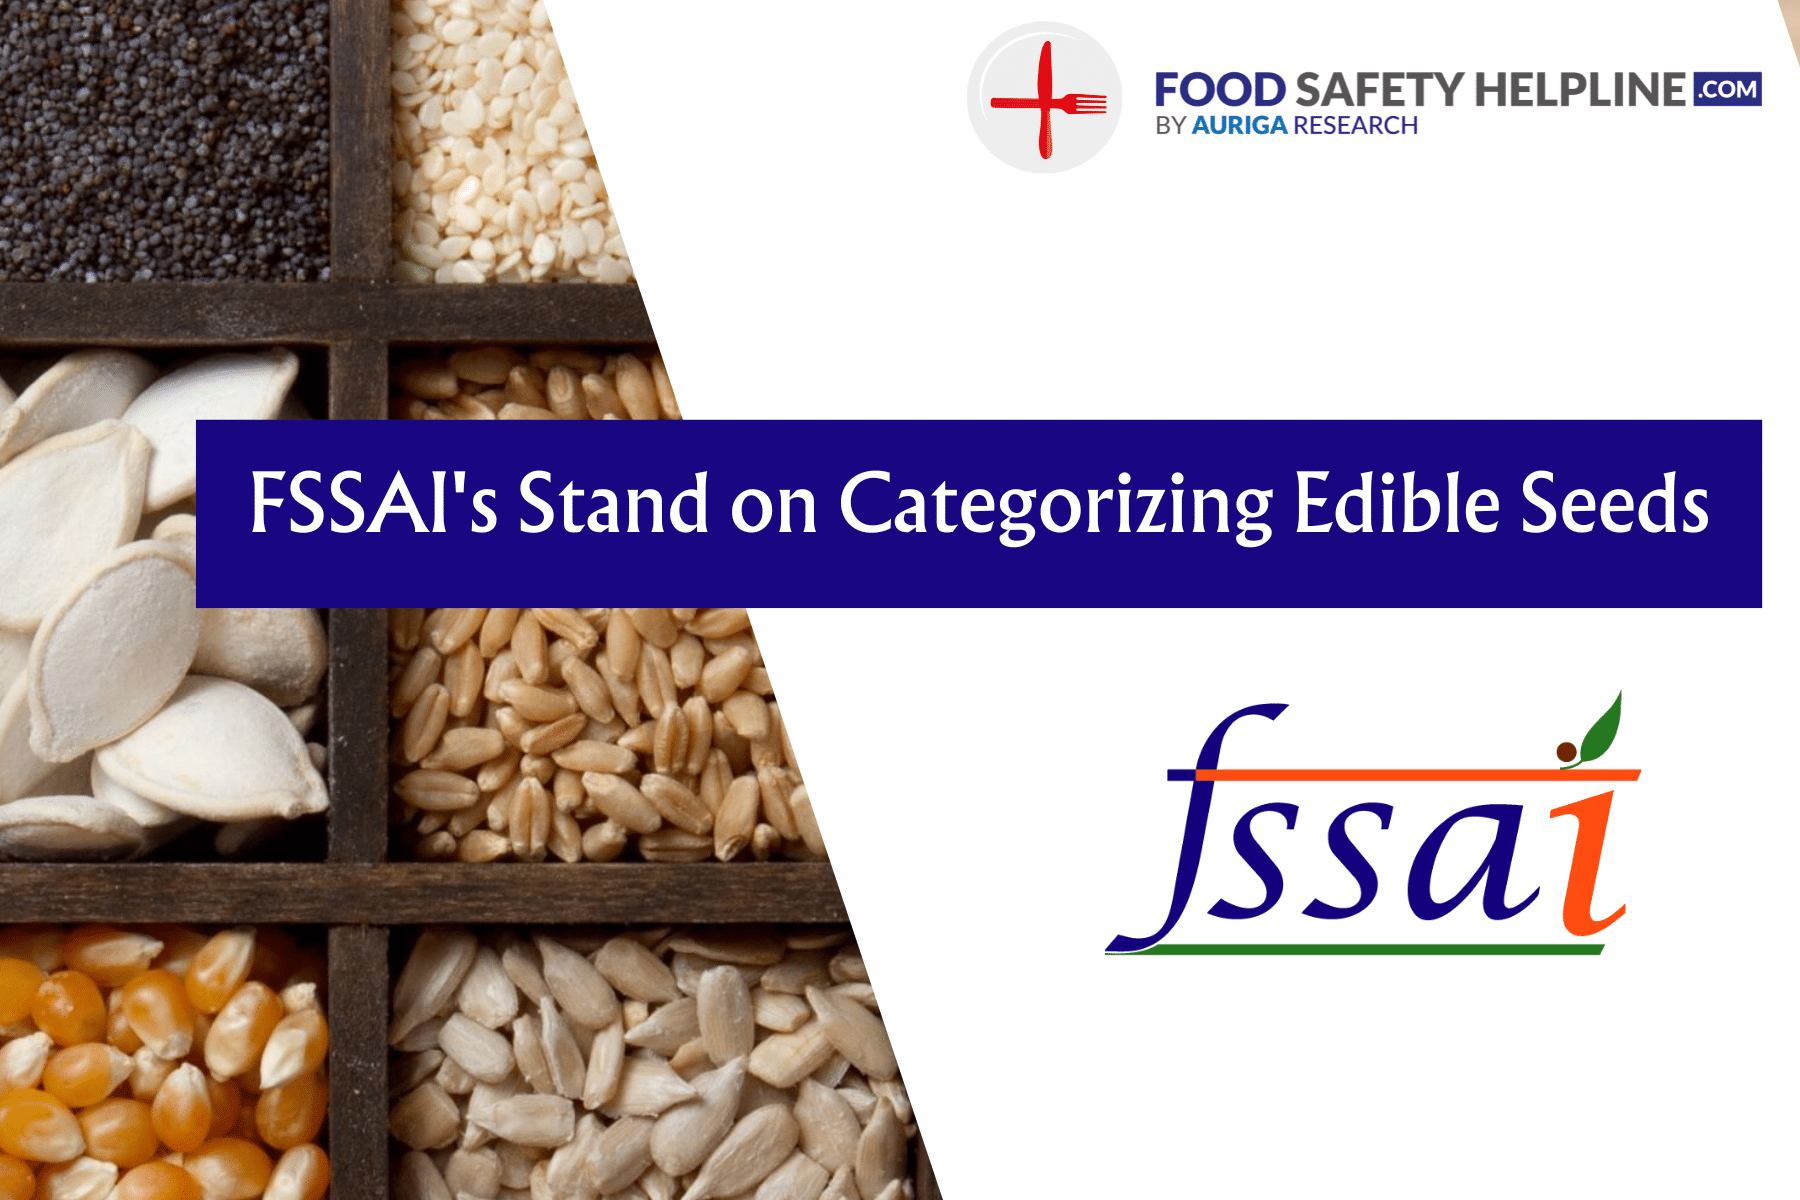 FSSAI’s Stand on Categorizing Edible Seeds